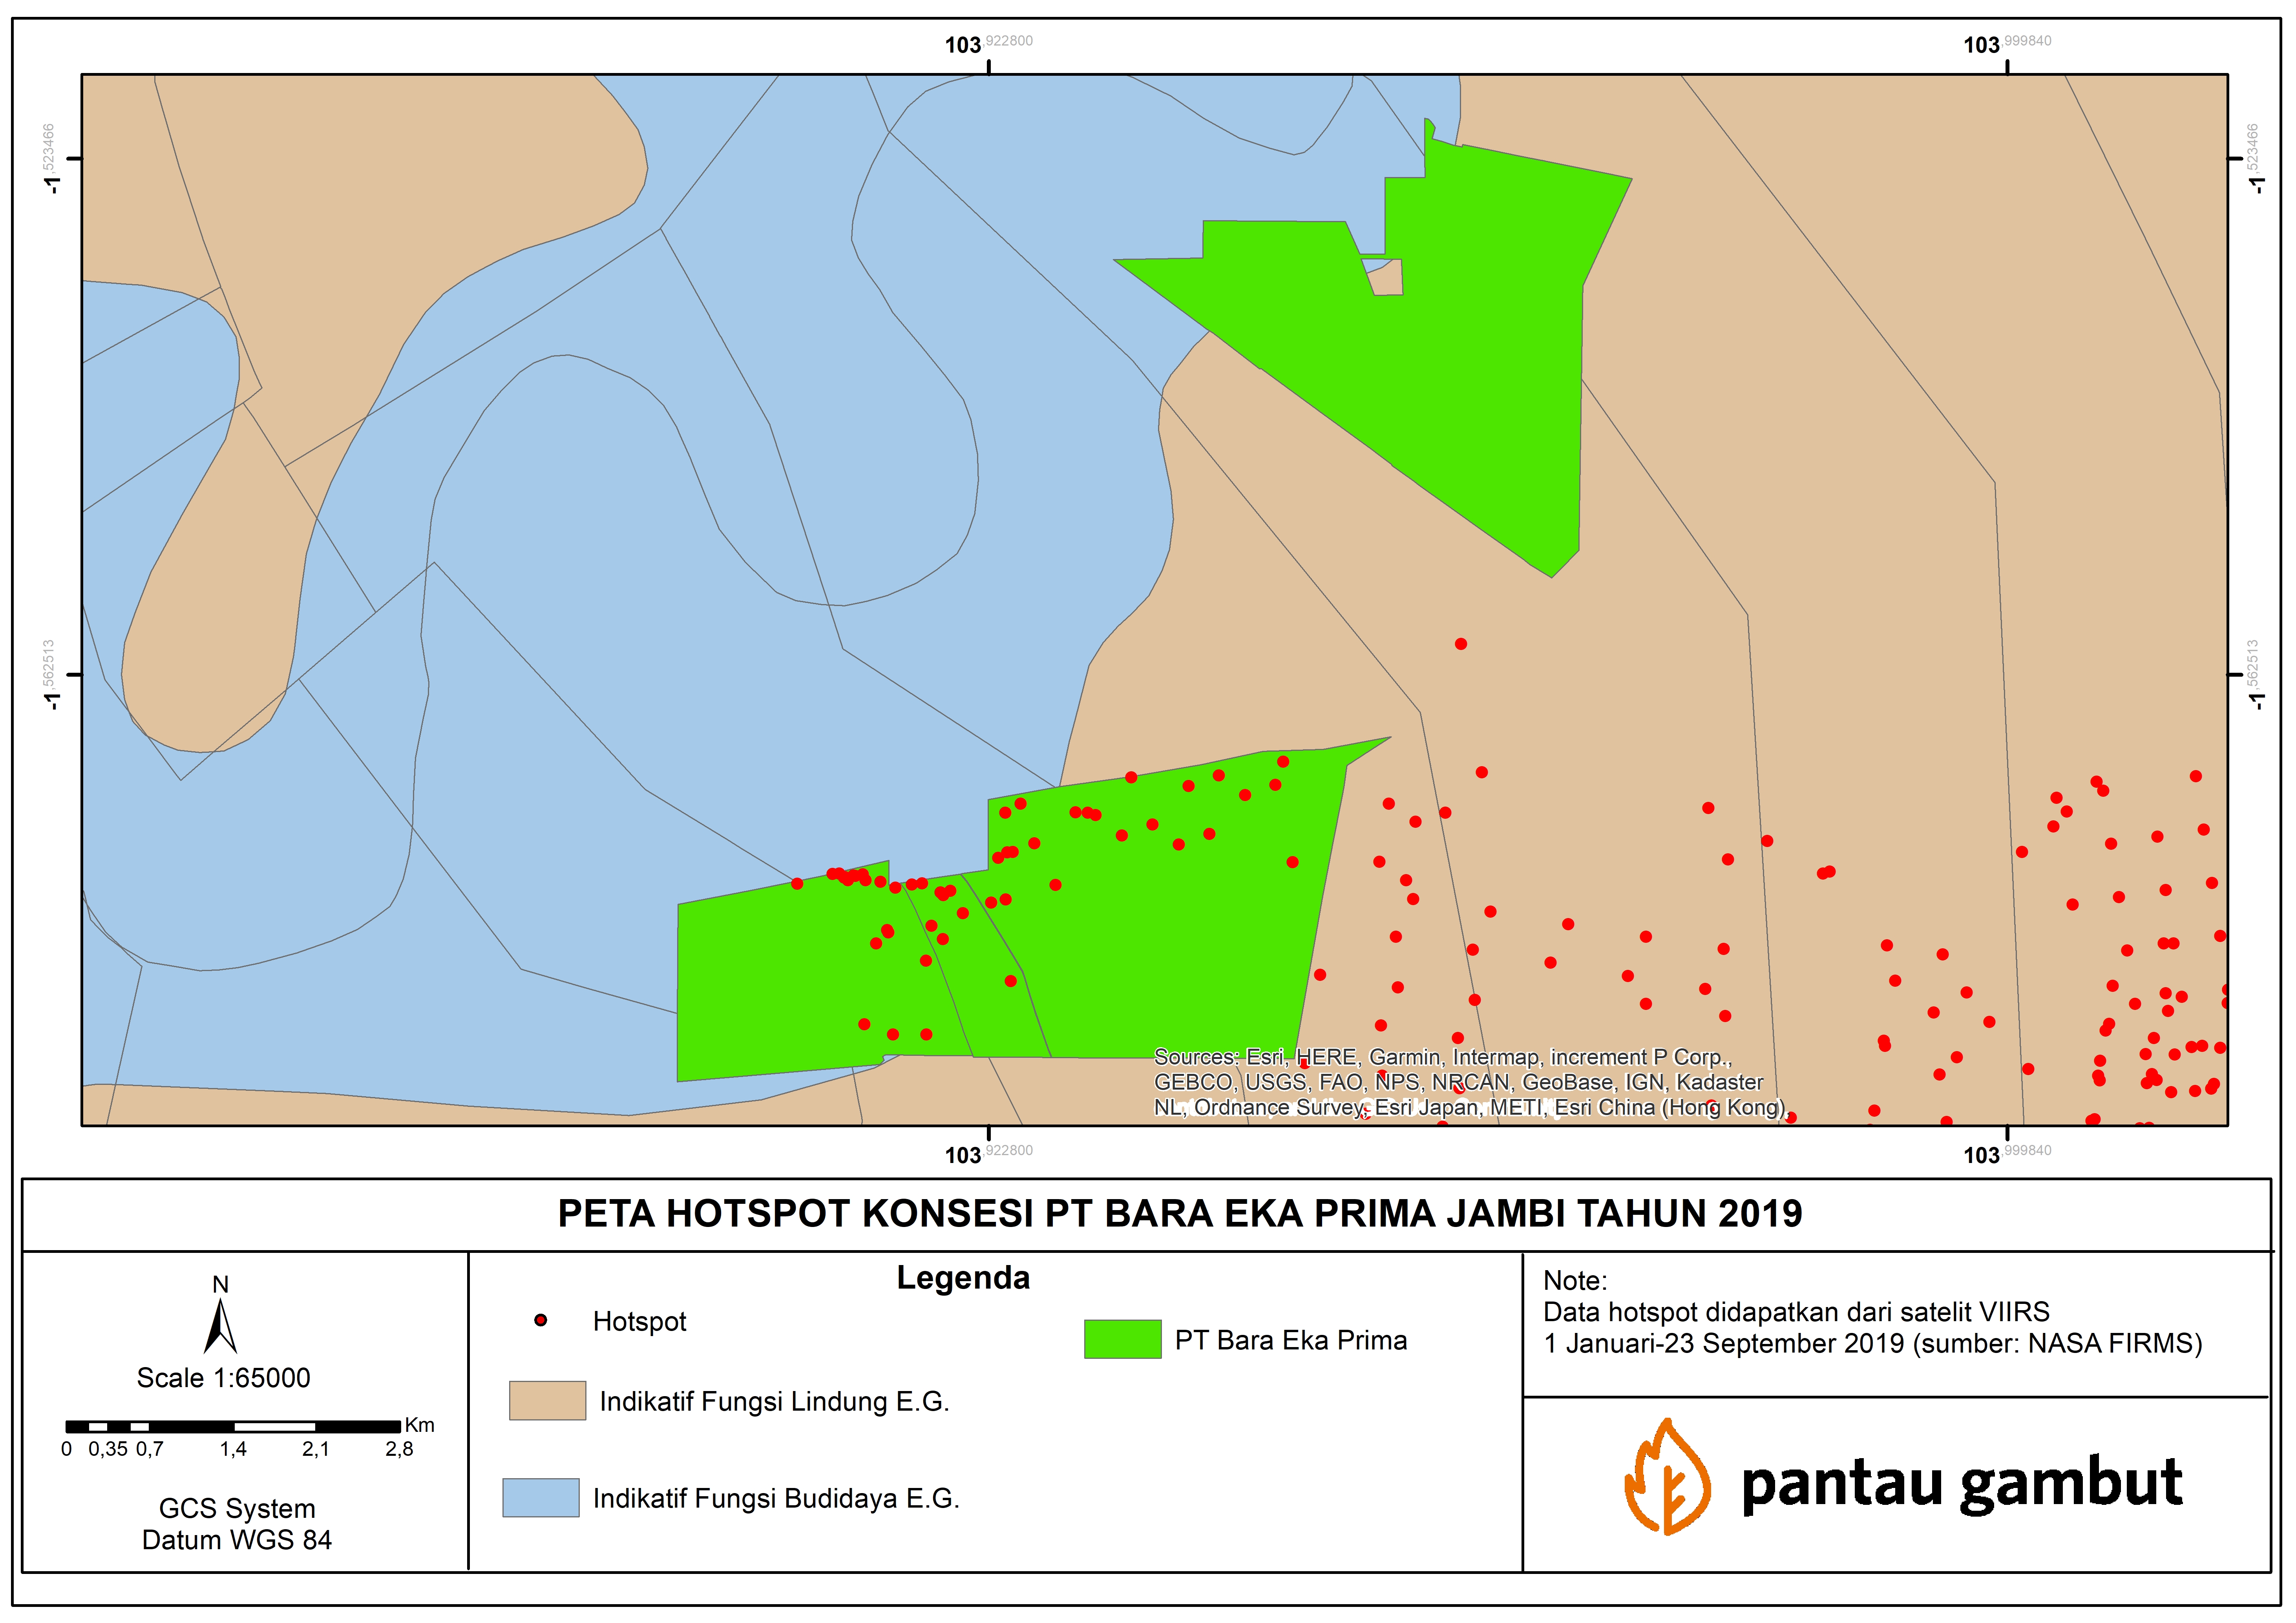 Distribution of hotspots at PT Bara Eka Prima Period 1 January - 23 September 2019 ©Pantau Gambut